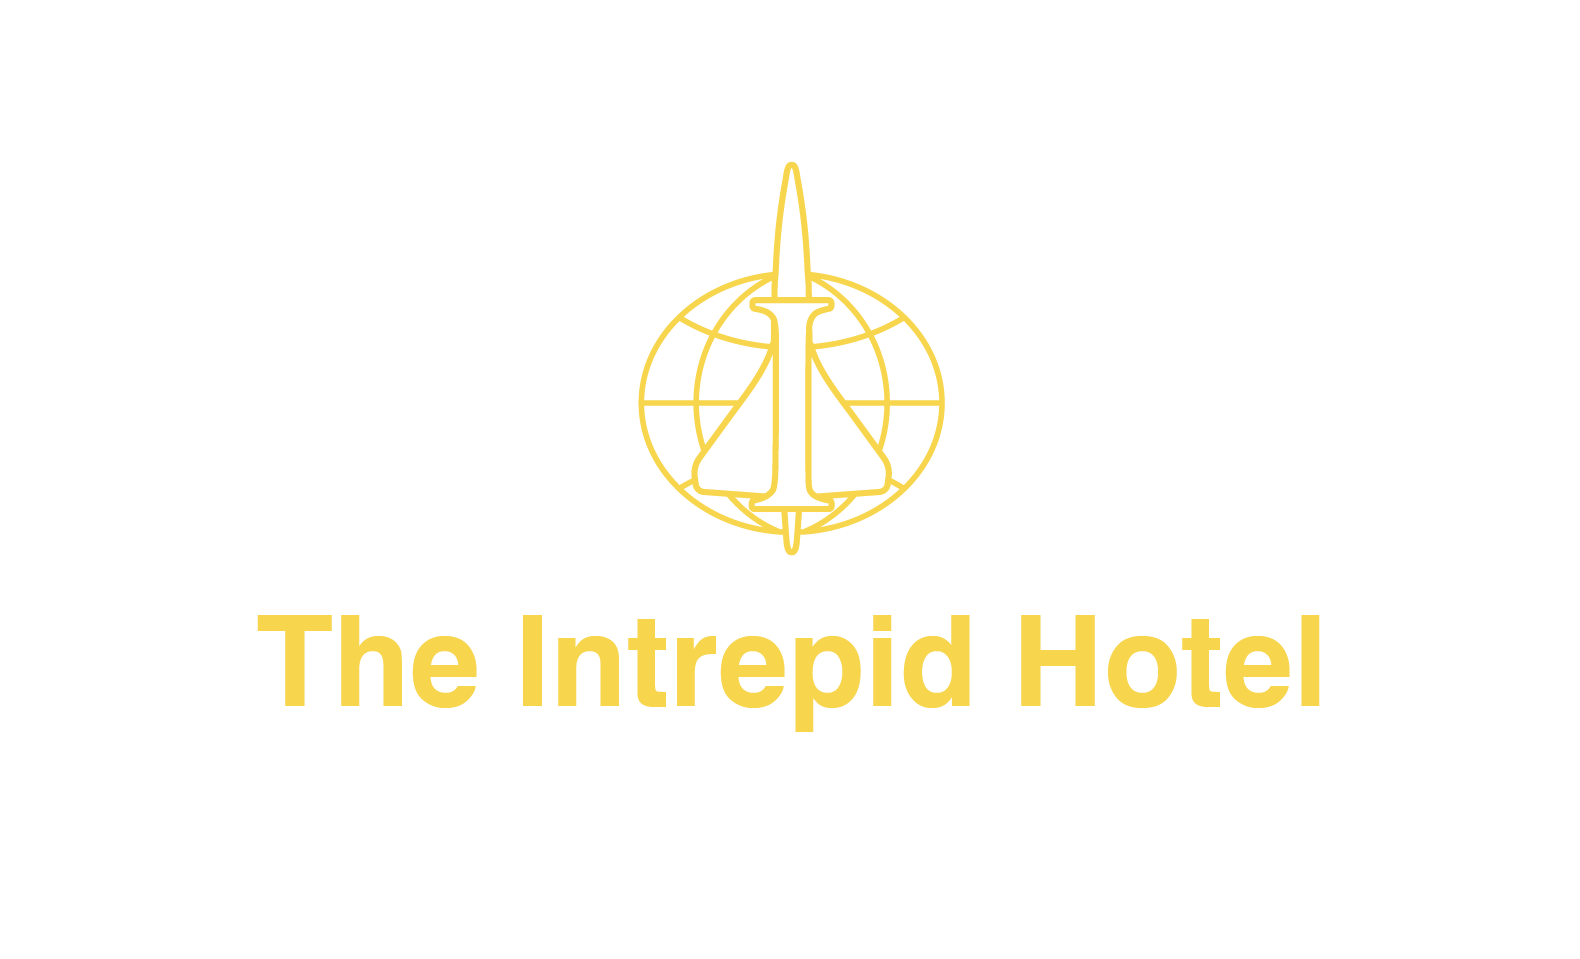 THE INTREPID HOTEL